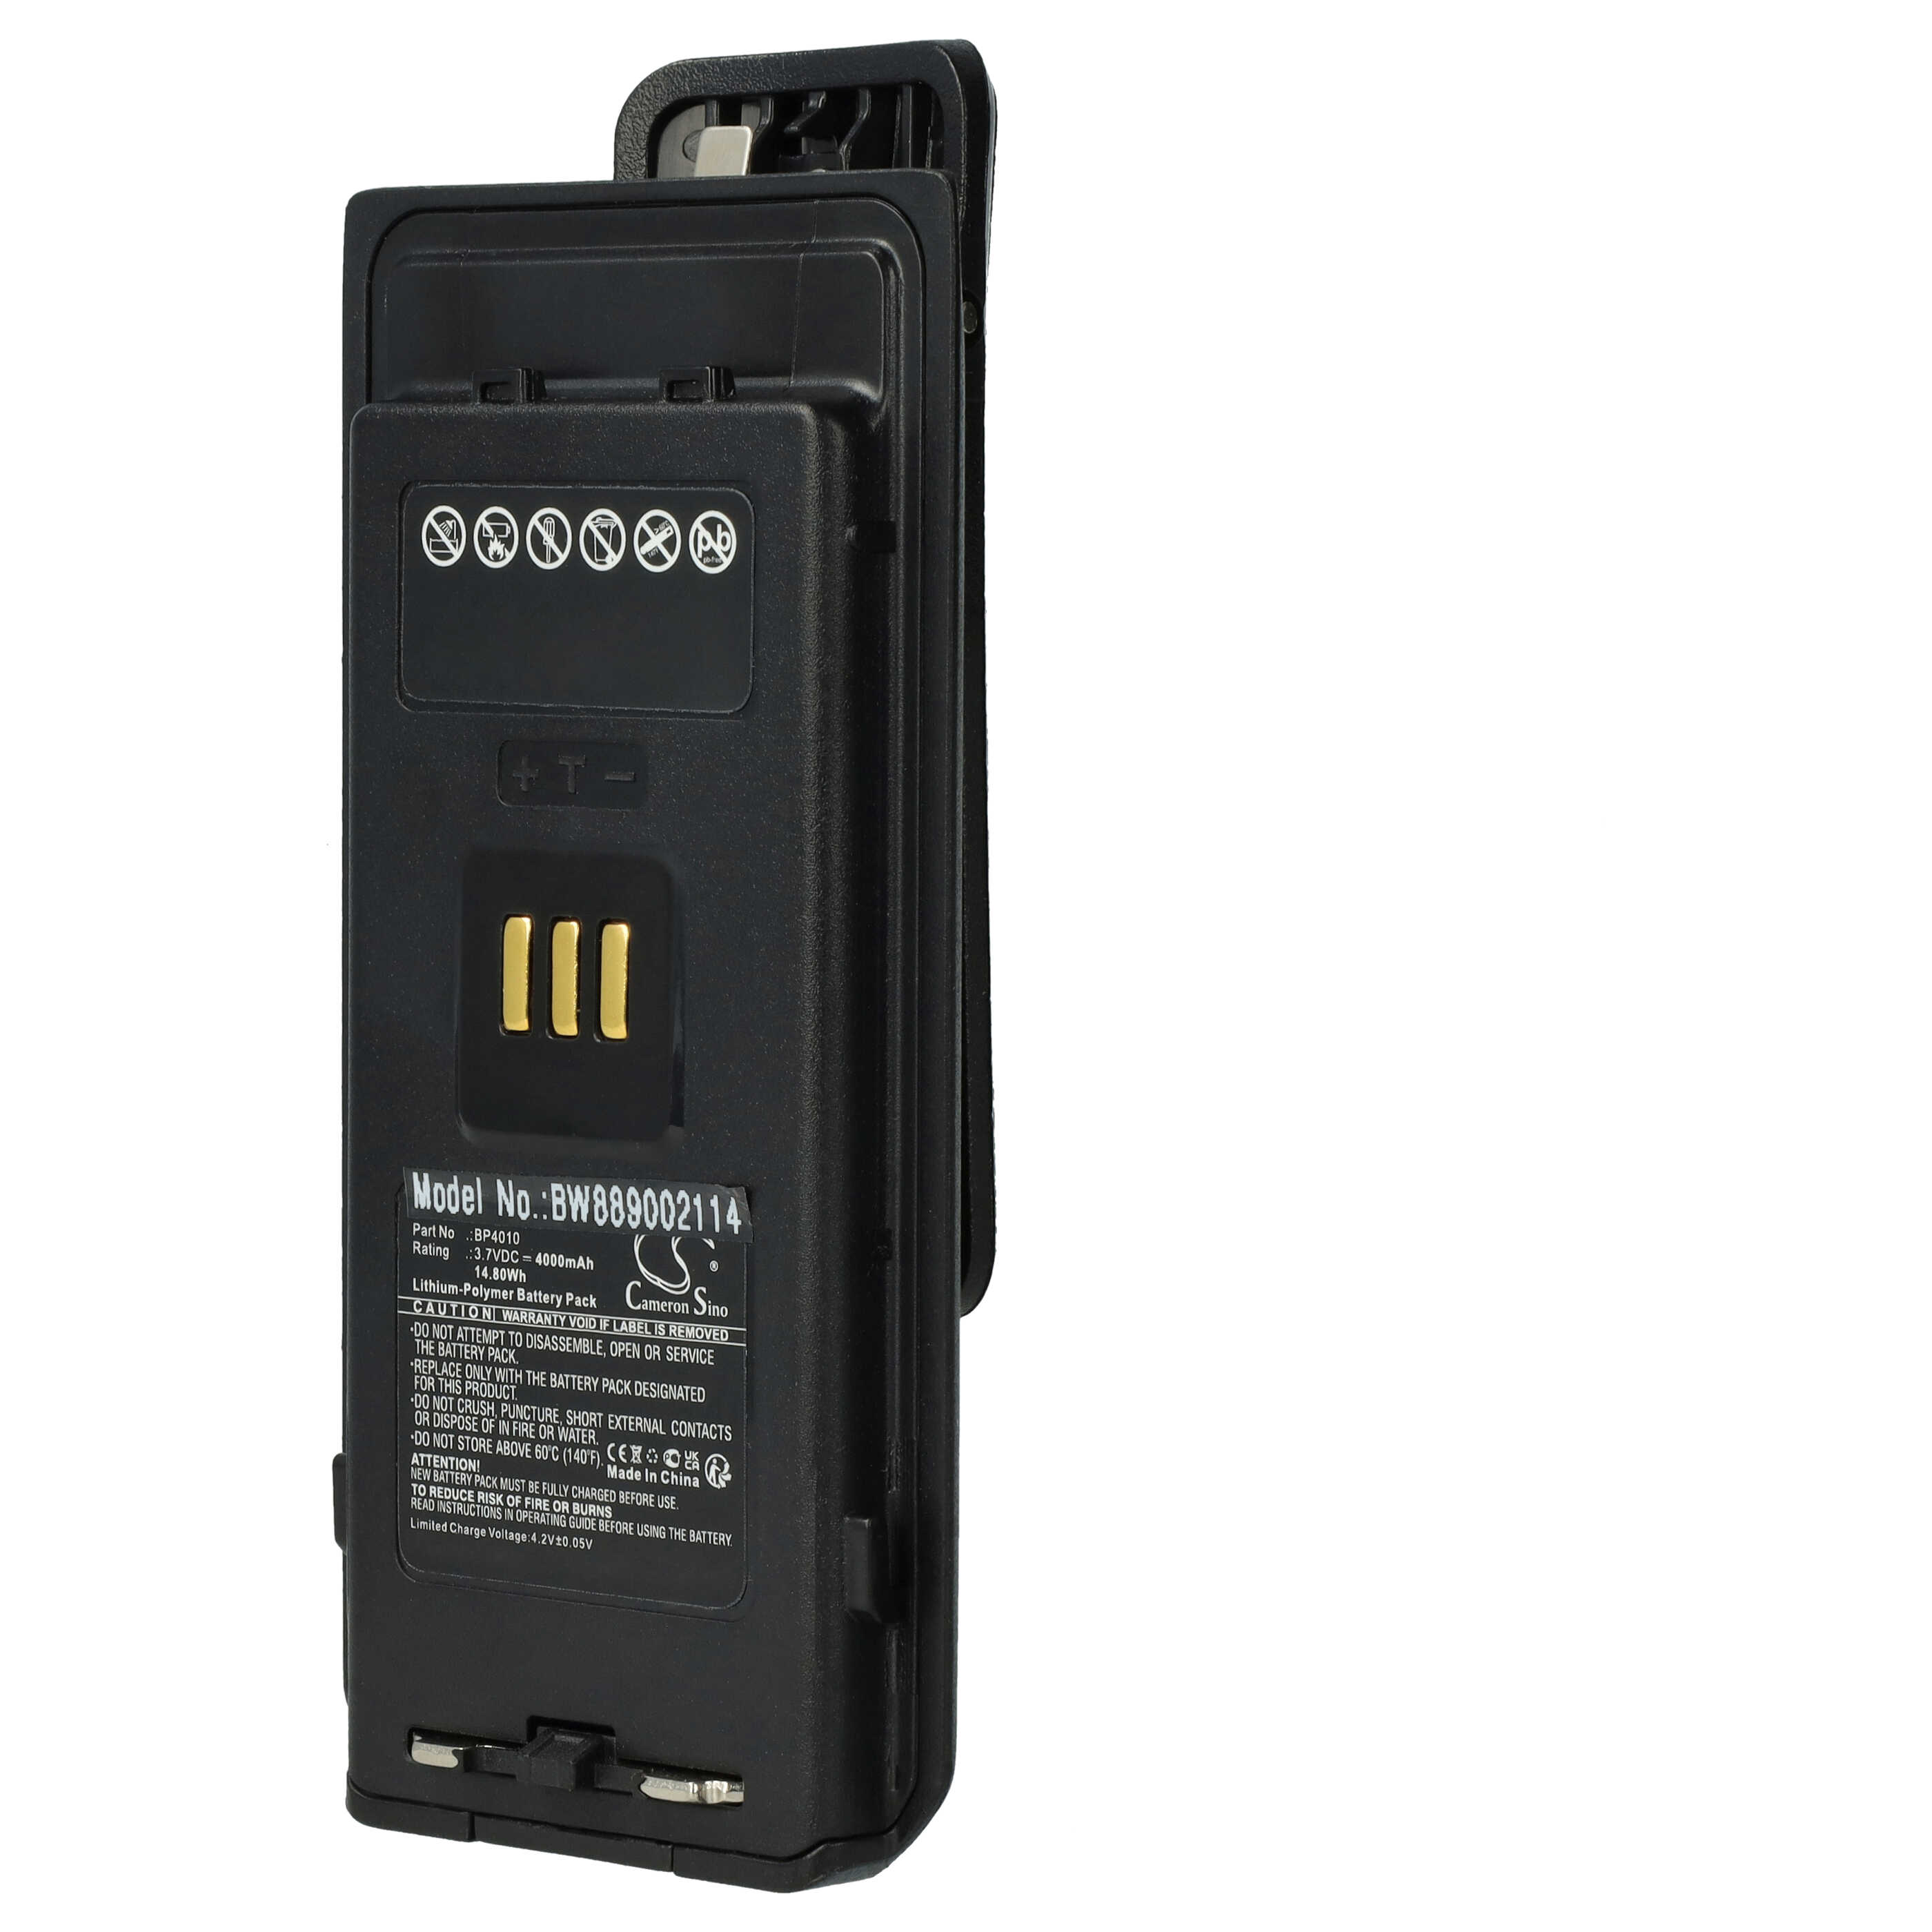 Akumulator do radiotelefonu zamiennik Hytera BP4010 - 4000 mAh 3,7 V LiPo + klips na pasek